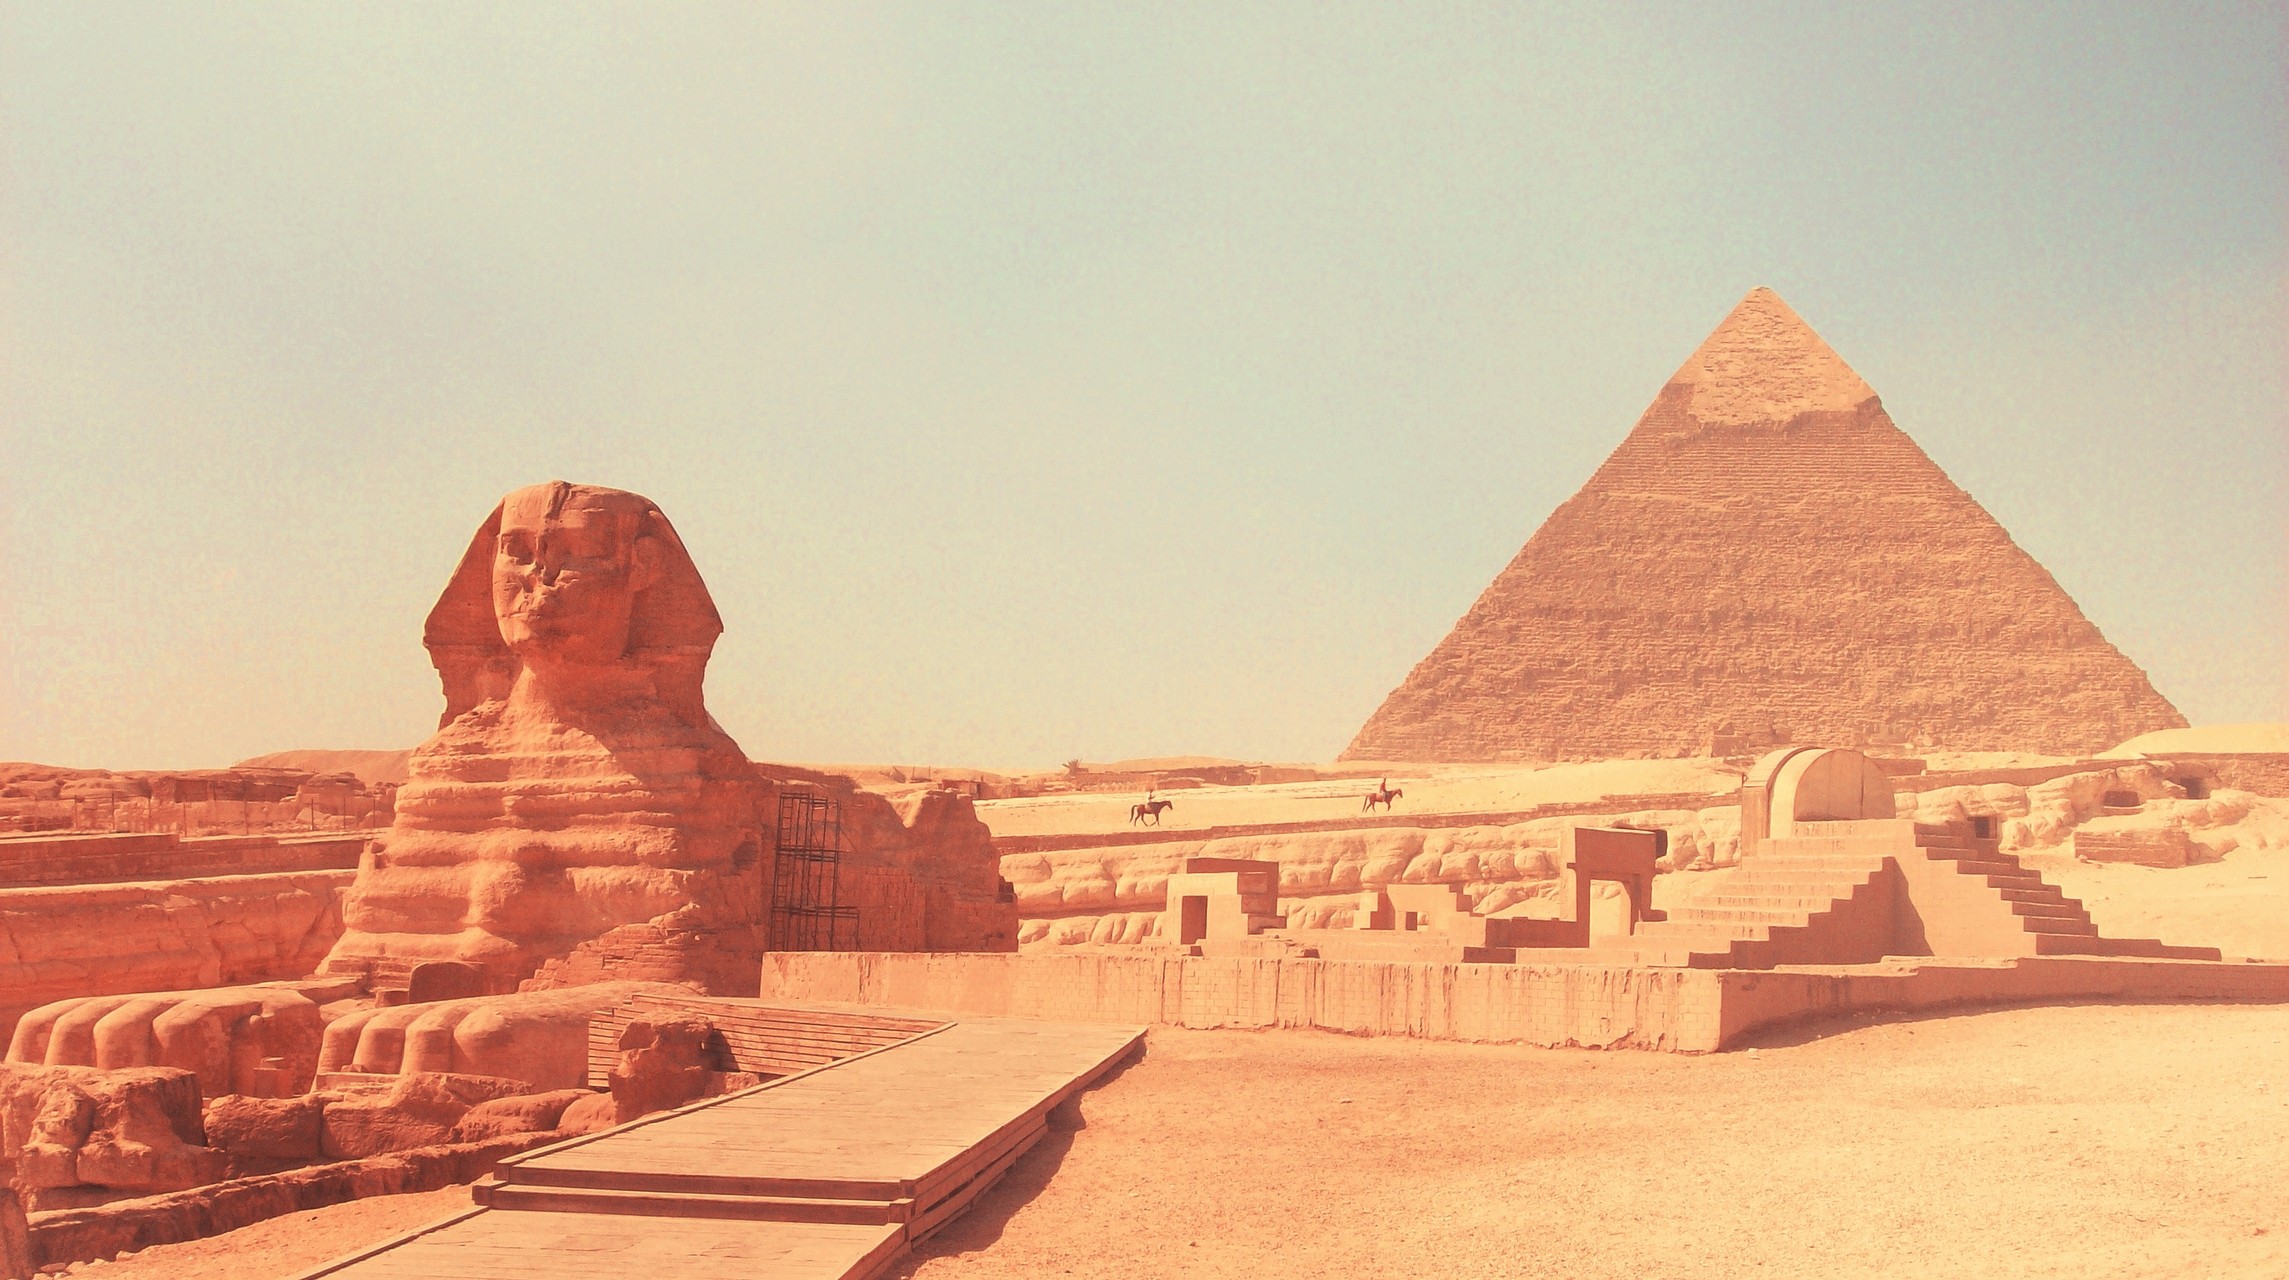 Egypt Pyramid Desert Pyramids Of Giza Sphinx Of Giza 2289x1280